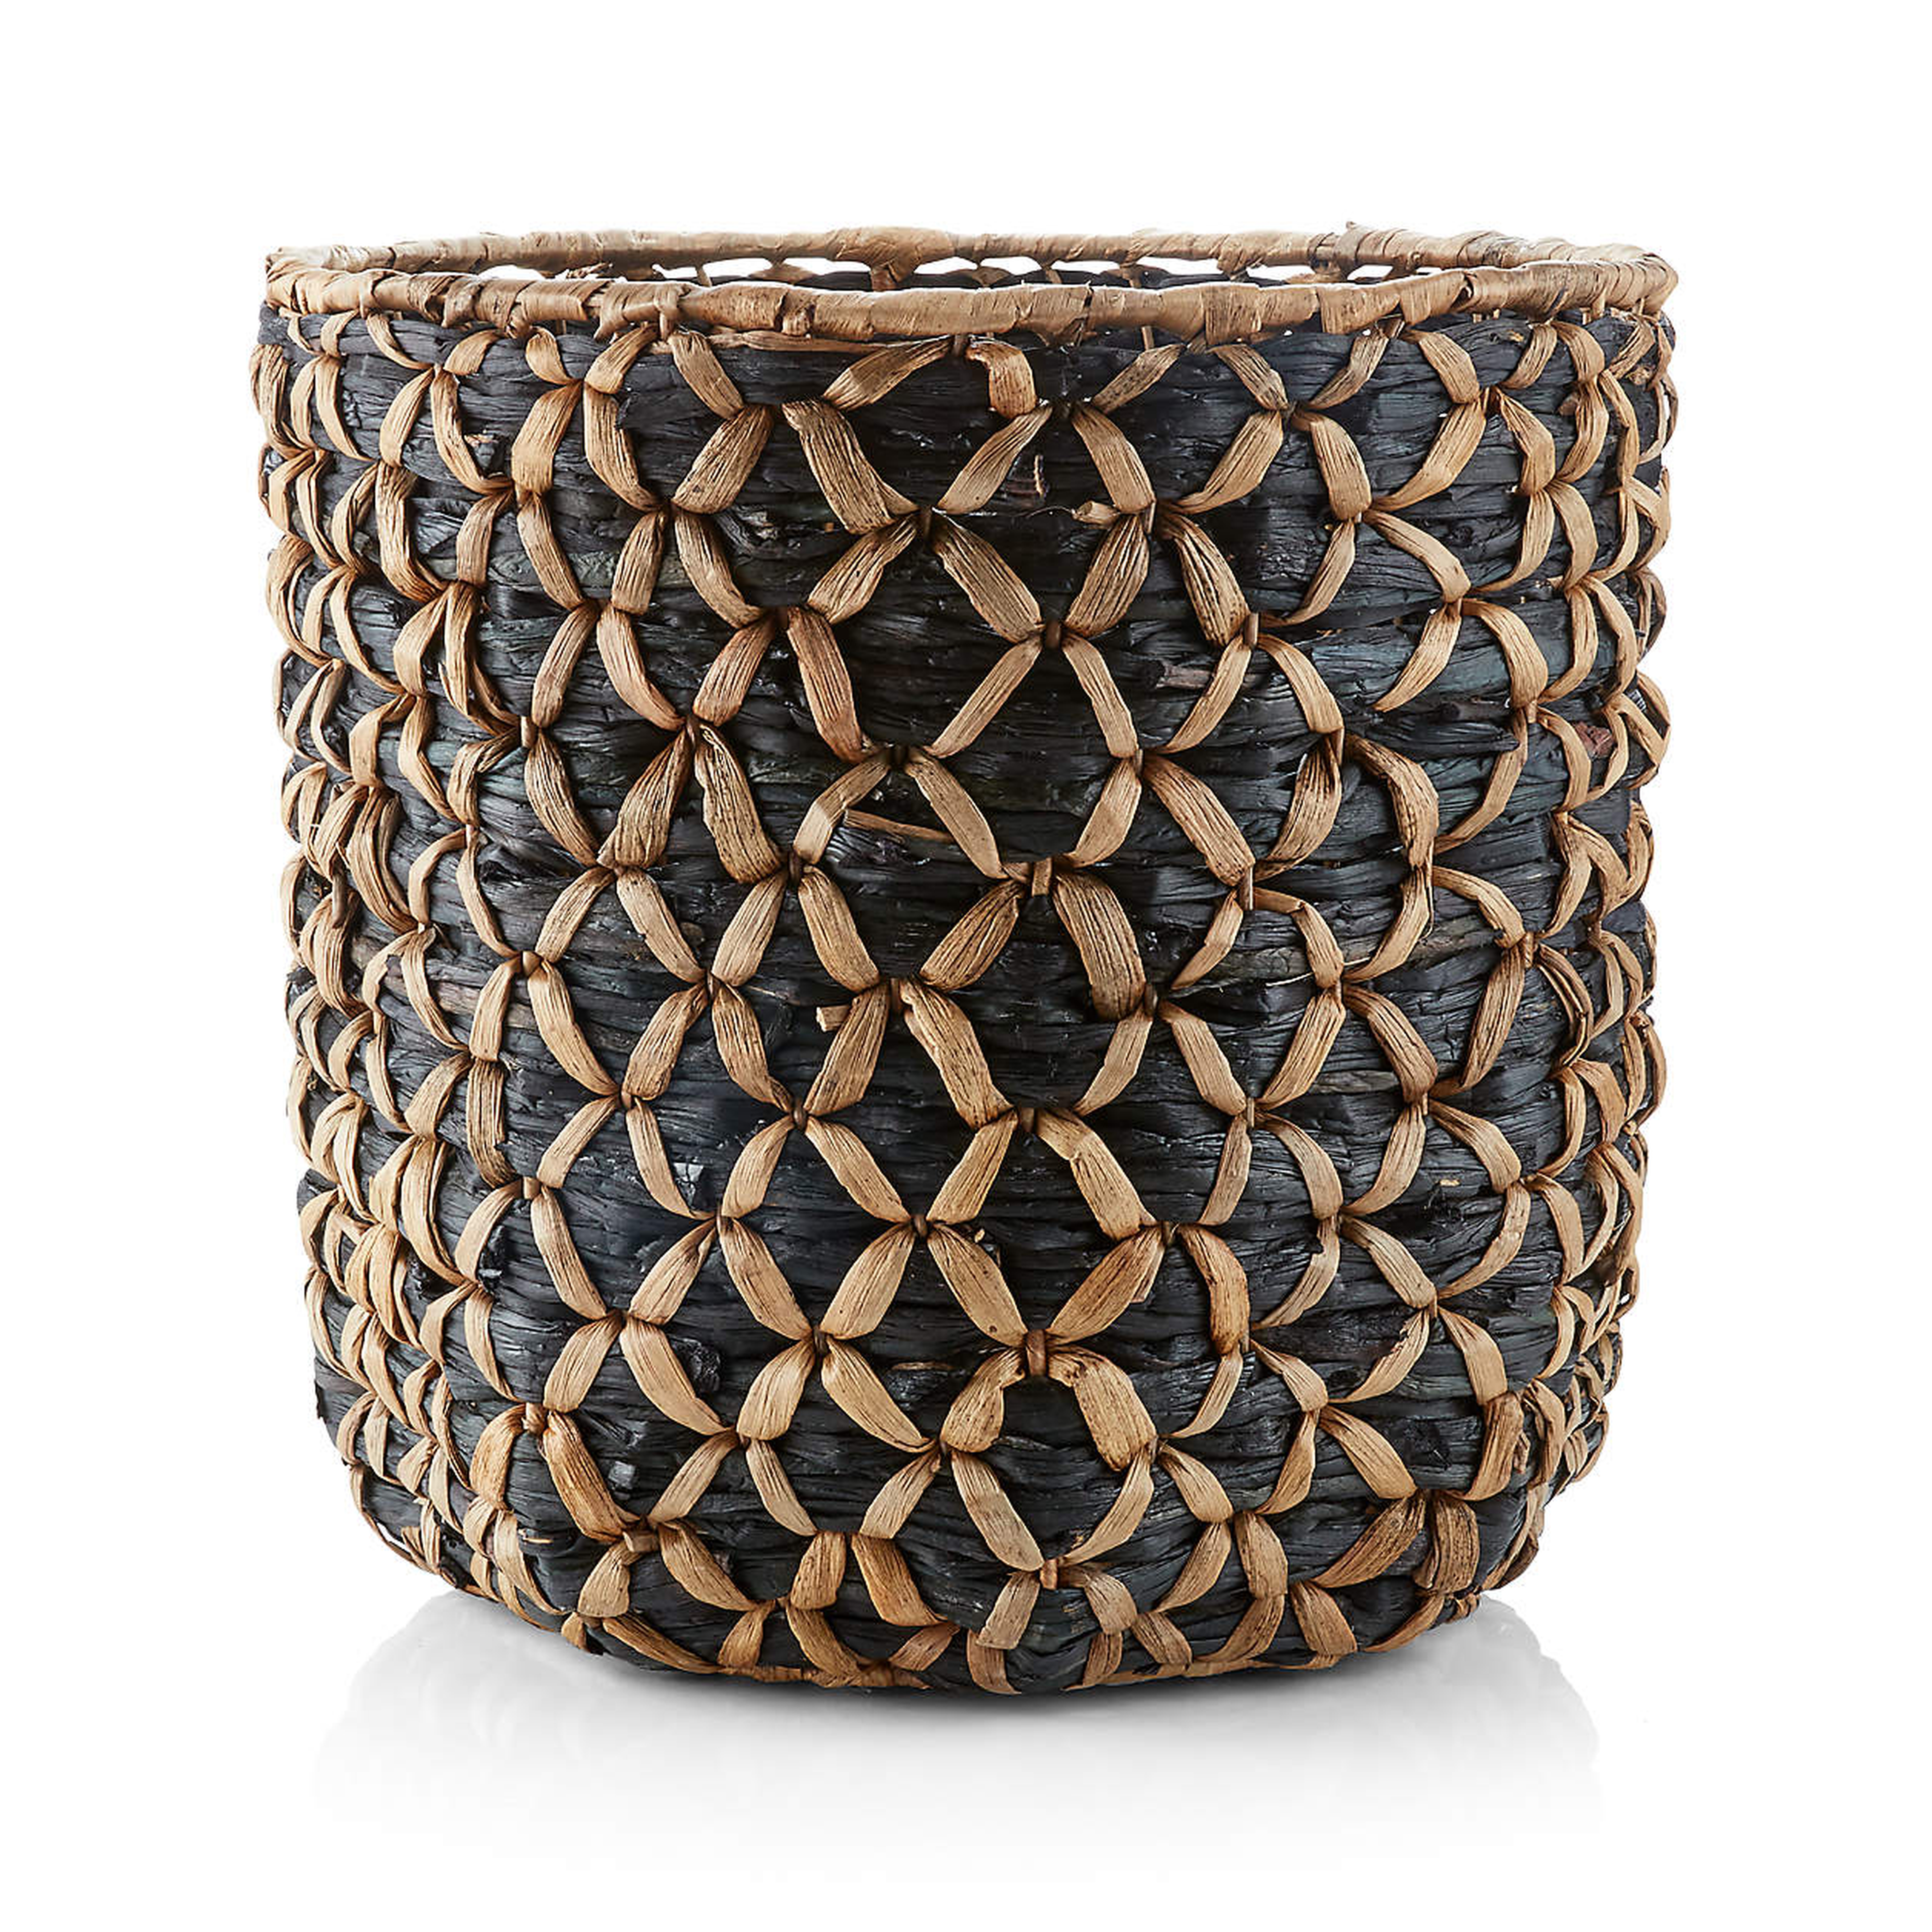 Safiyah Woven Black and Natural Basket - Crate and Barrel